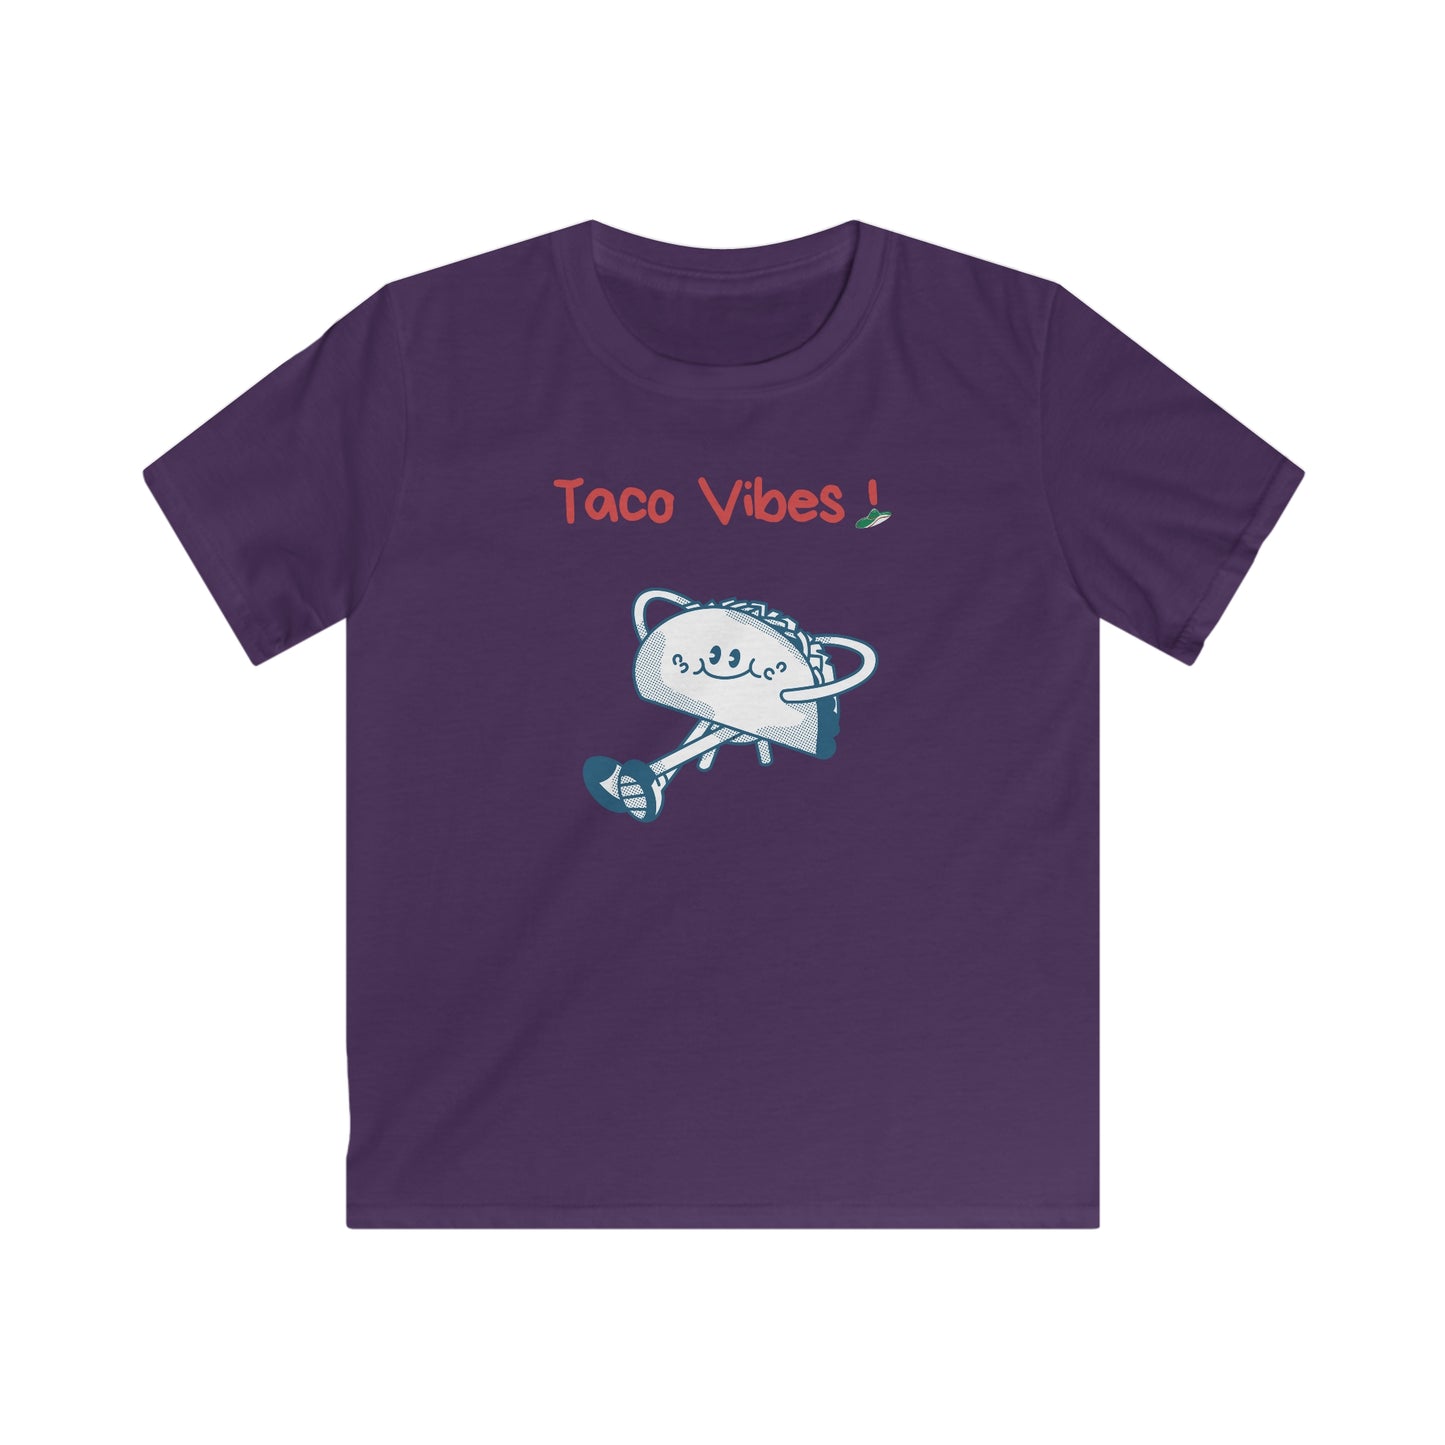 Taco Vibes! Kids Softstyle Tee